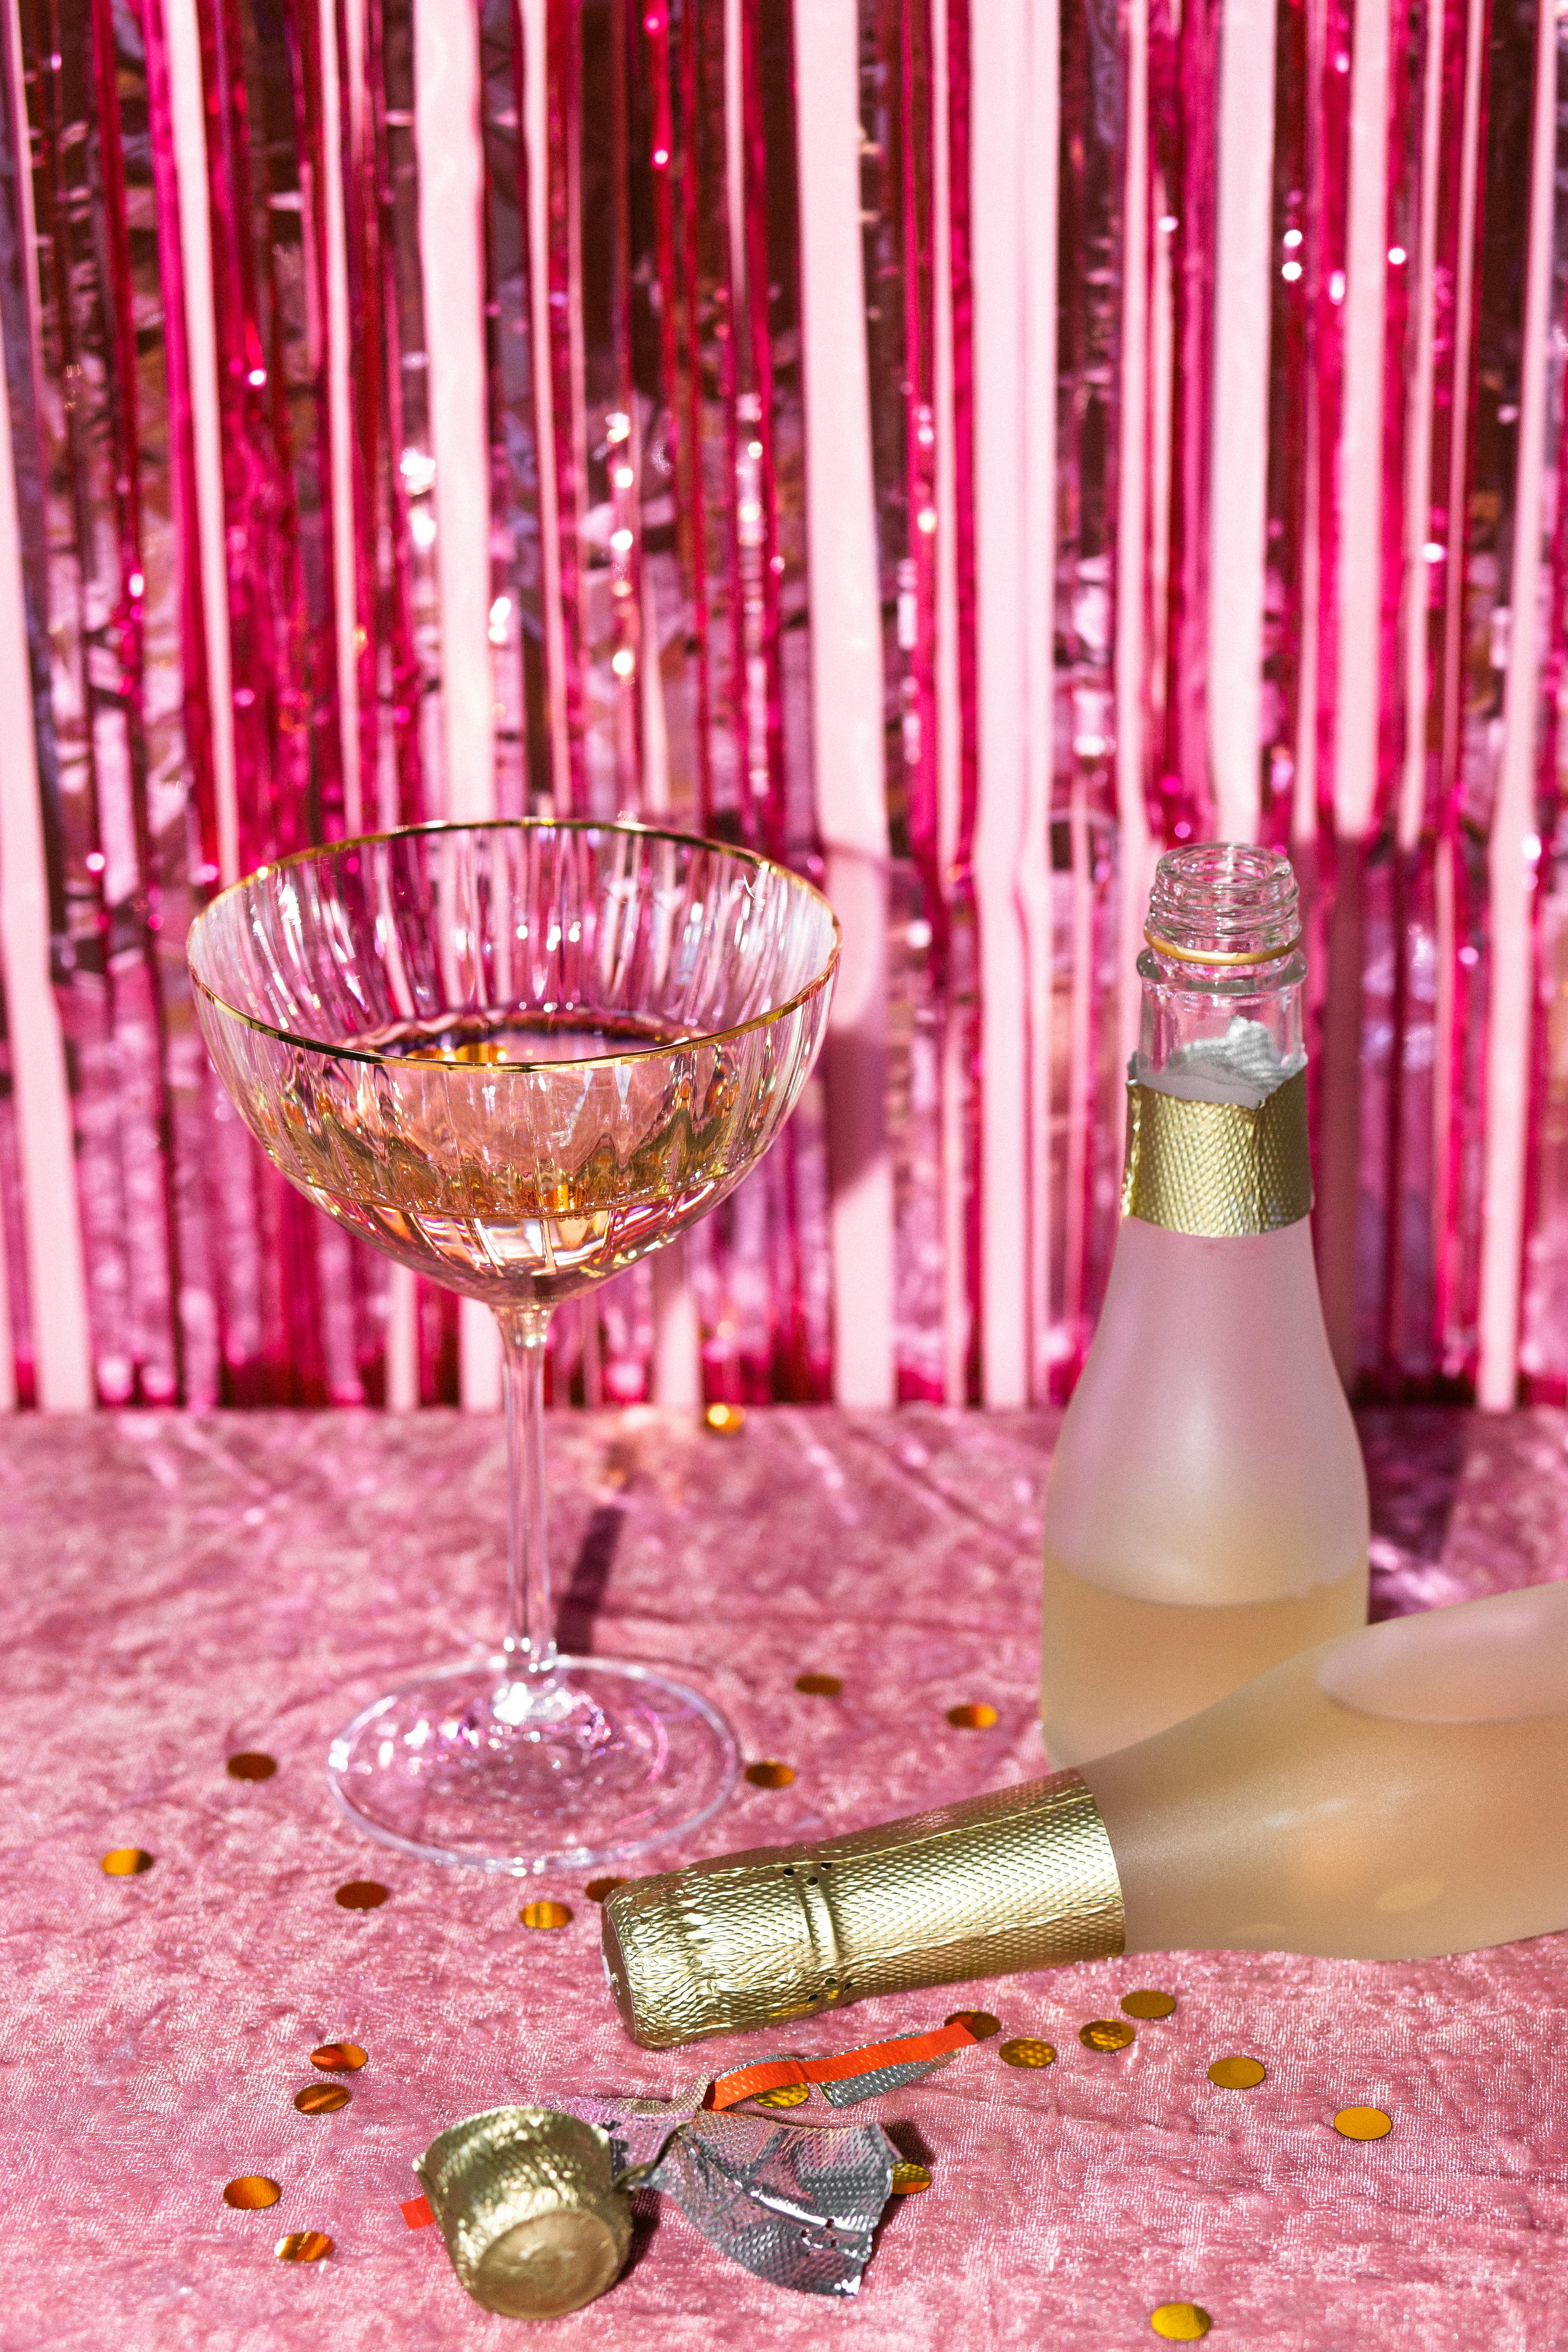 pink champagne bottle